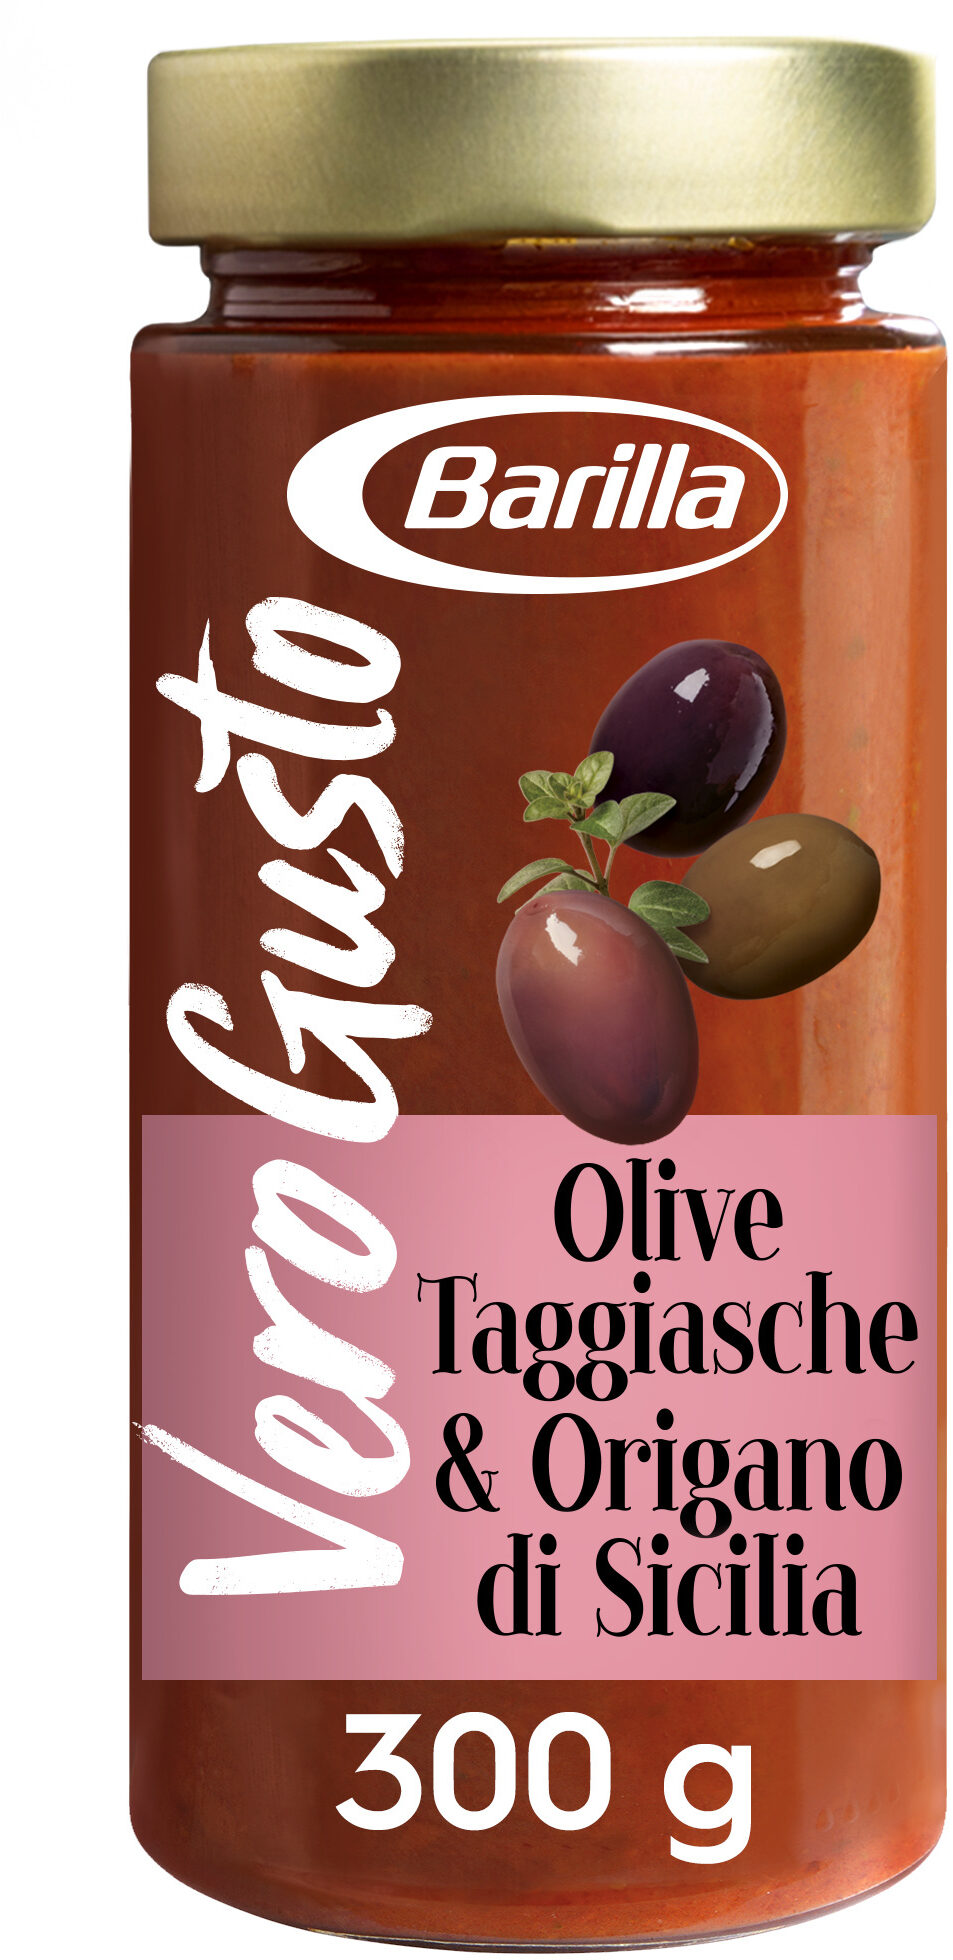 Barilla vero gusto sauce tomates aux olives et origan 300g - Produkt - fr